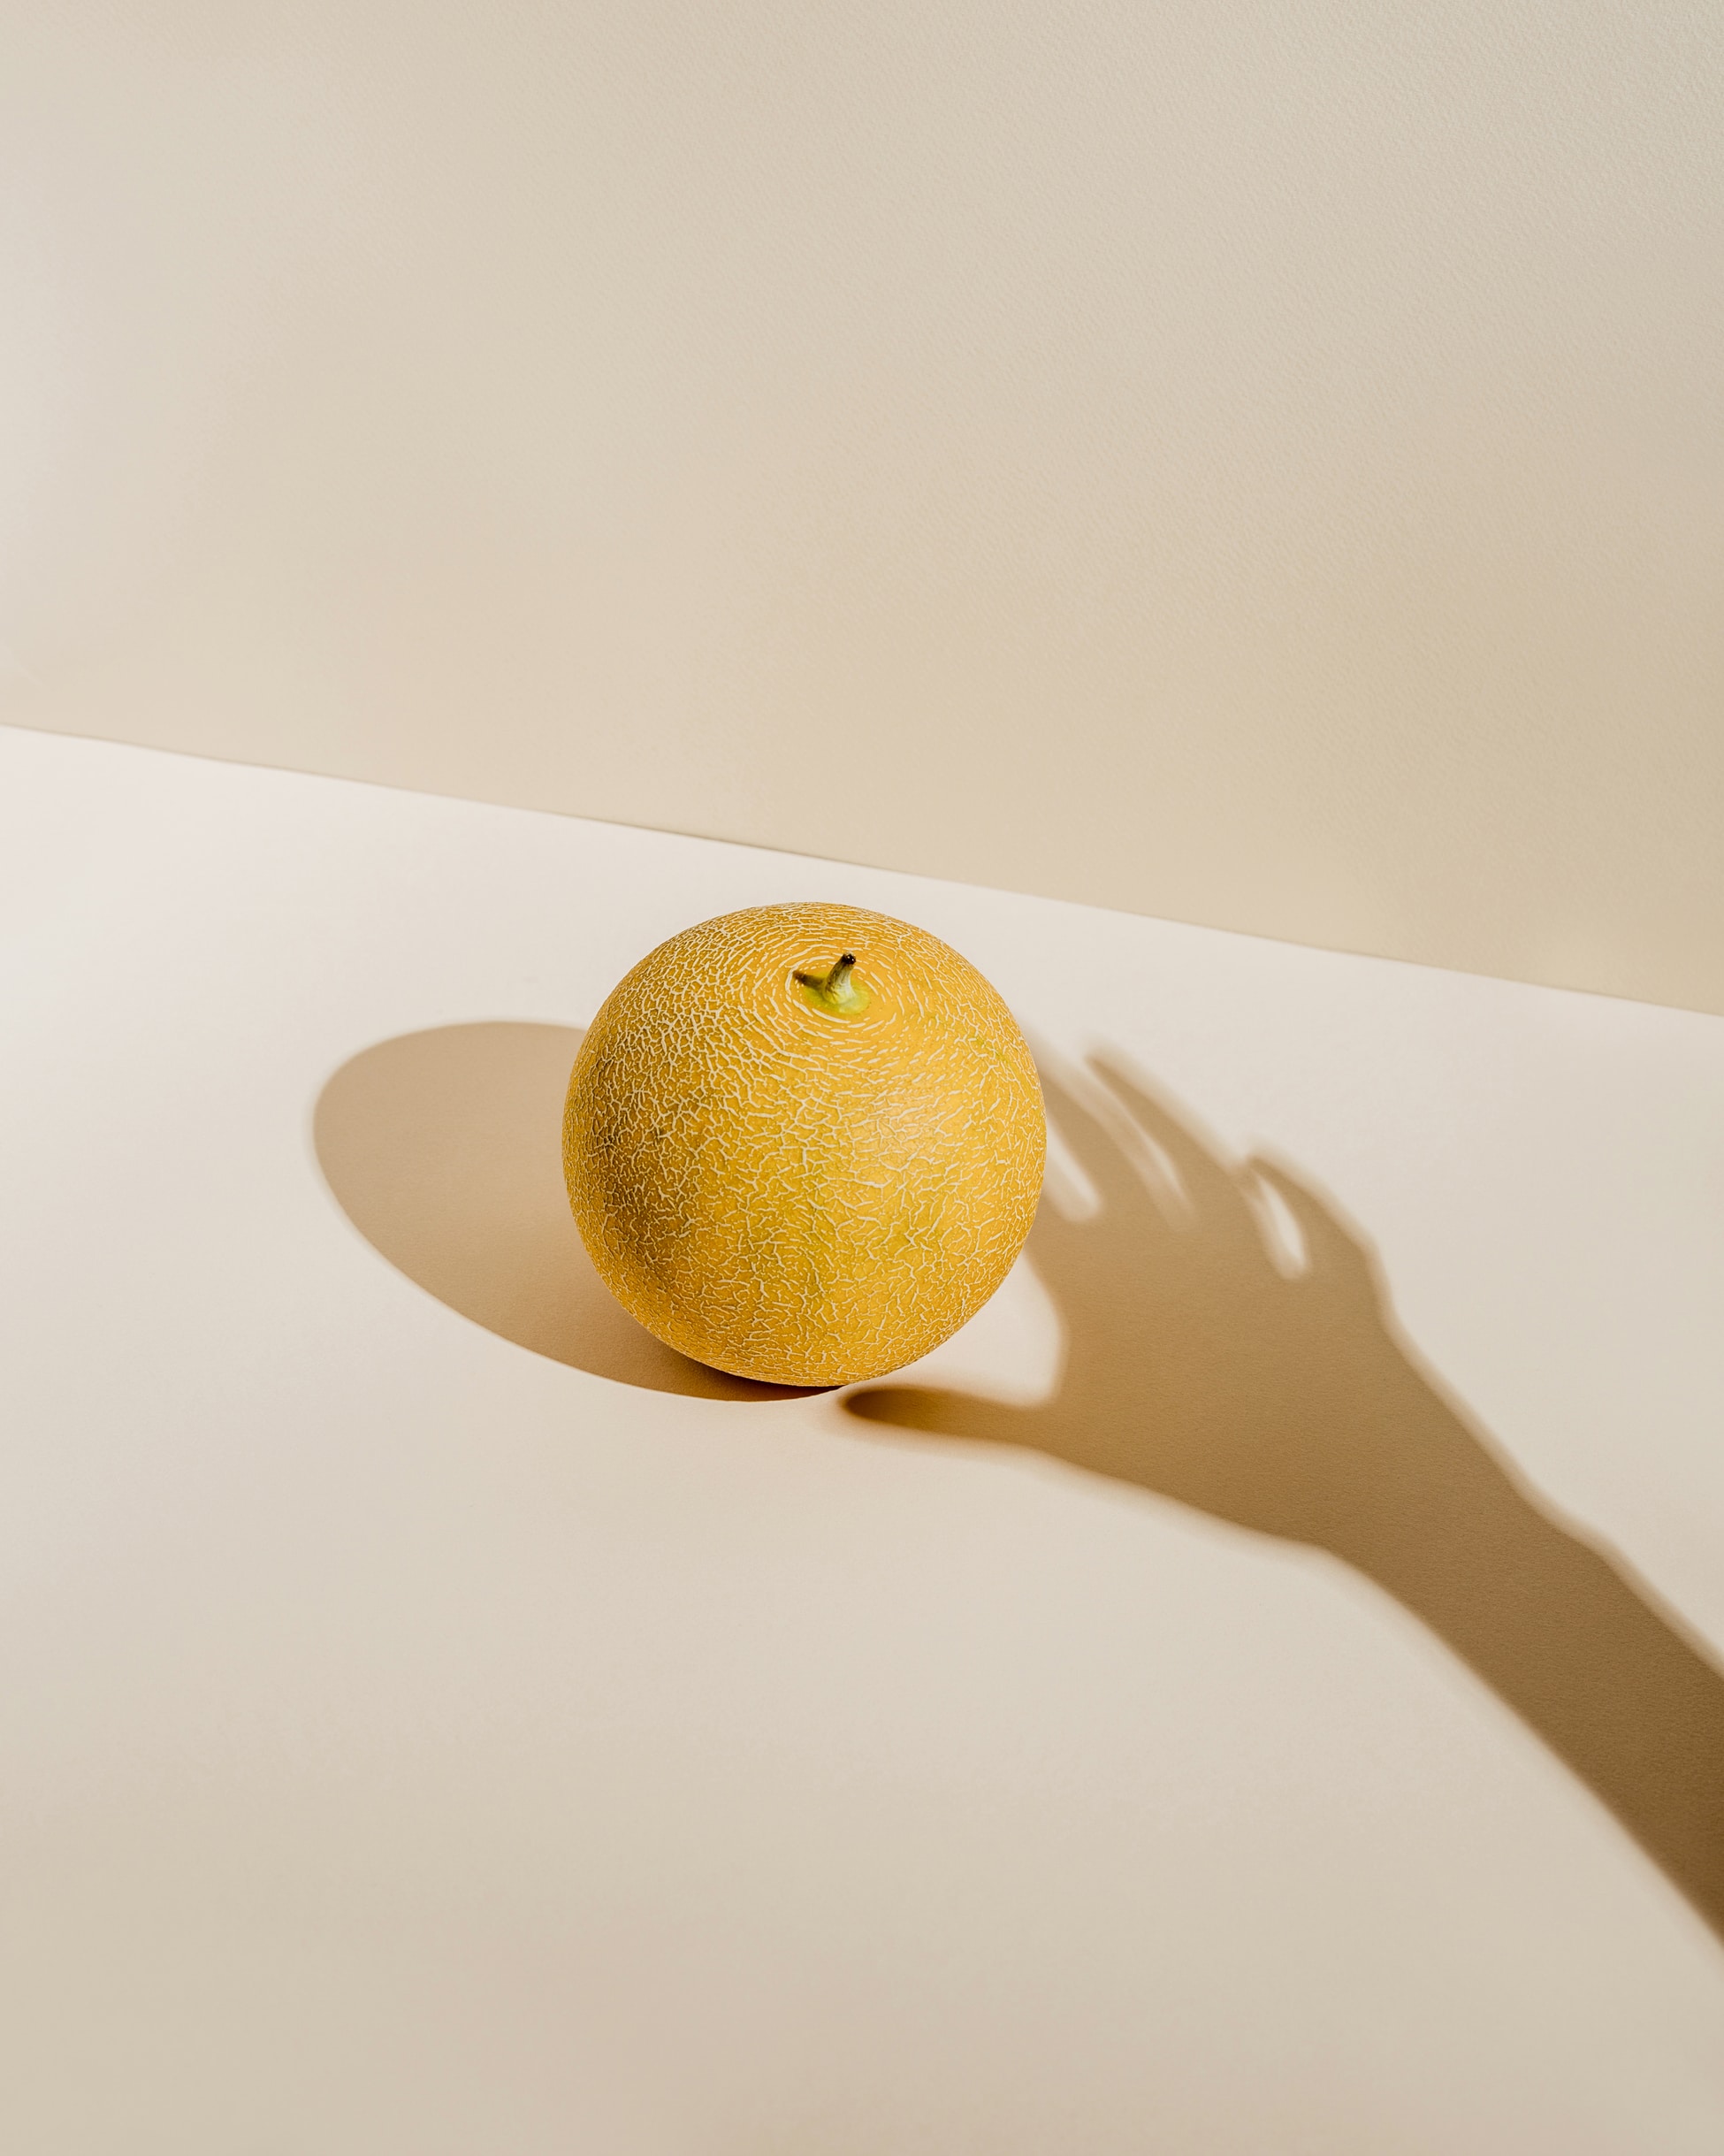 Shadow of a hand reaching towards lemon